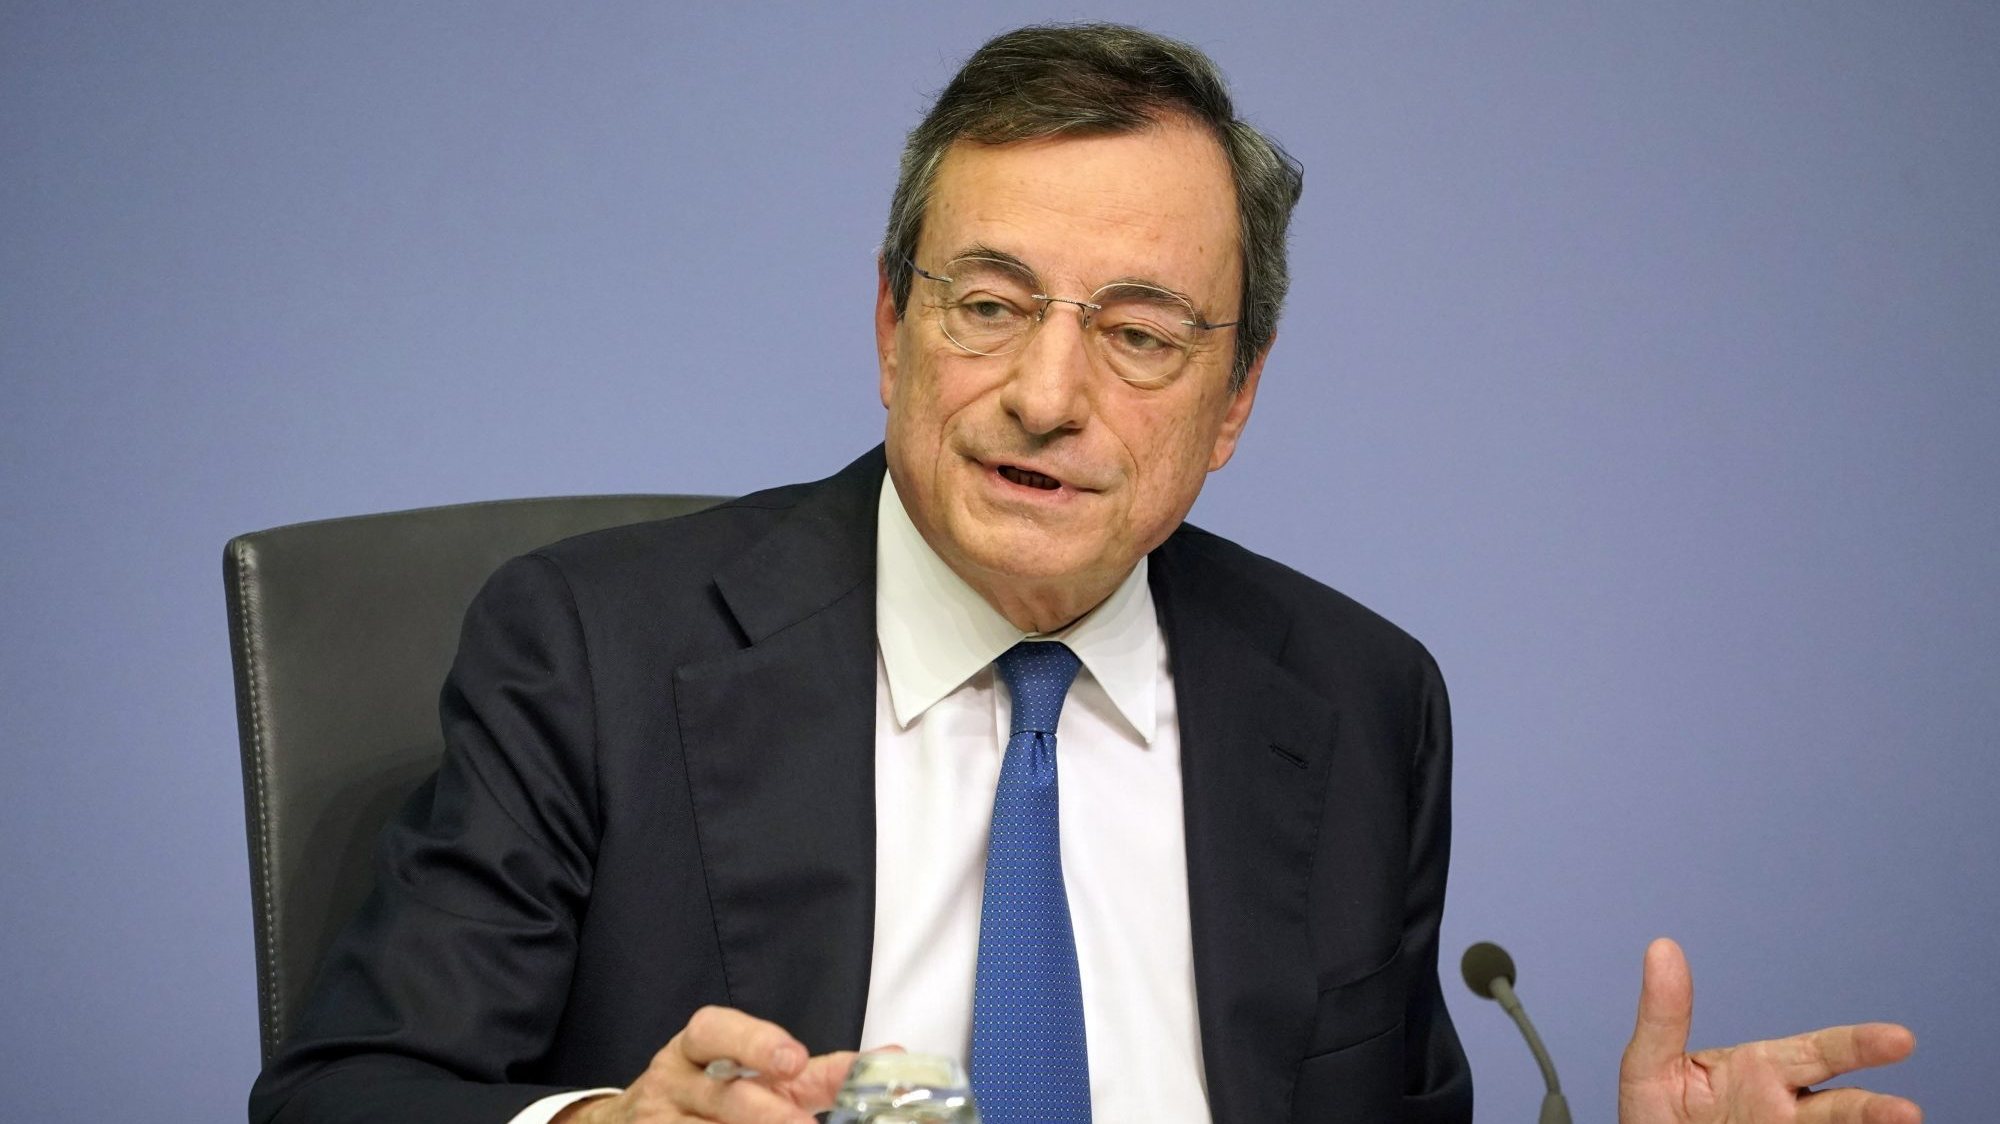 O pedido foi transmitido durante uma conversa telefónica entre Draghi e Ursula von der Leyen